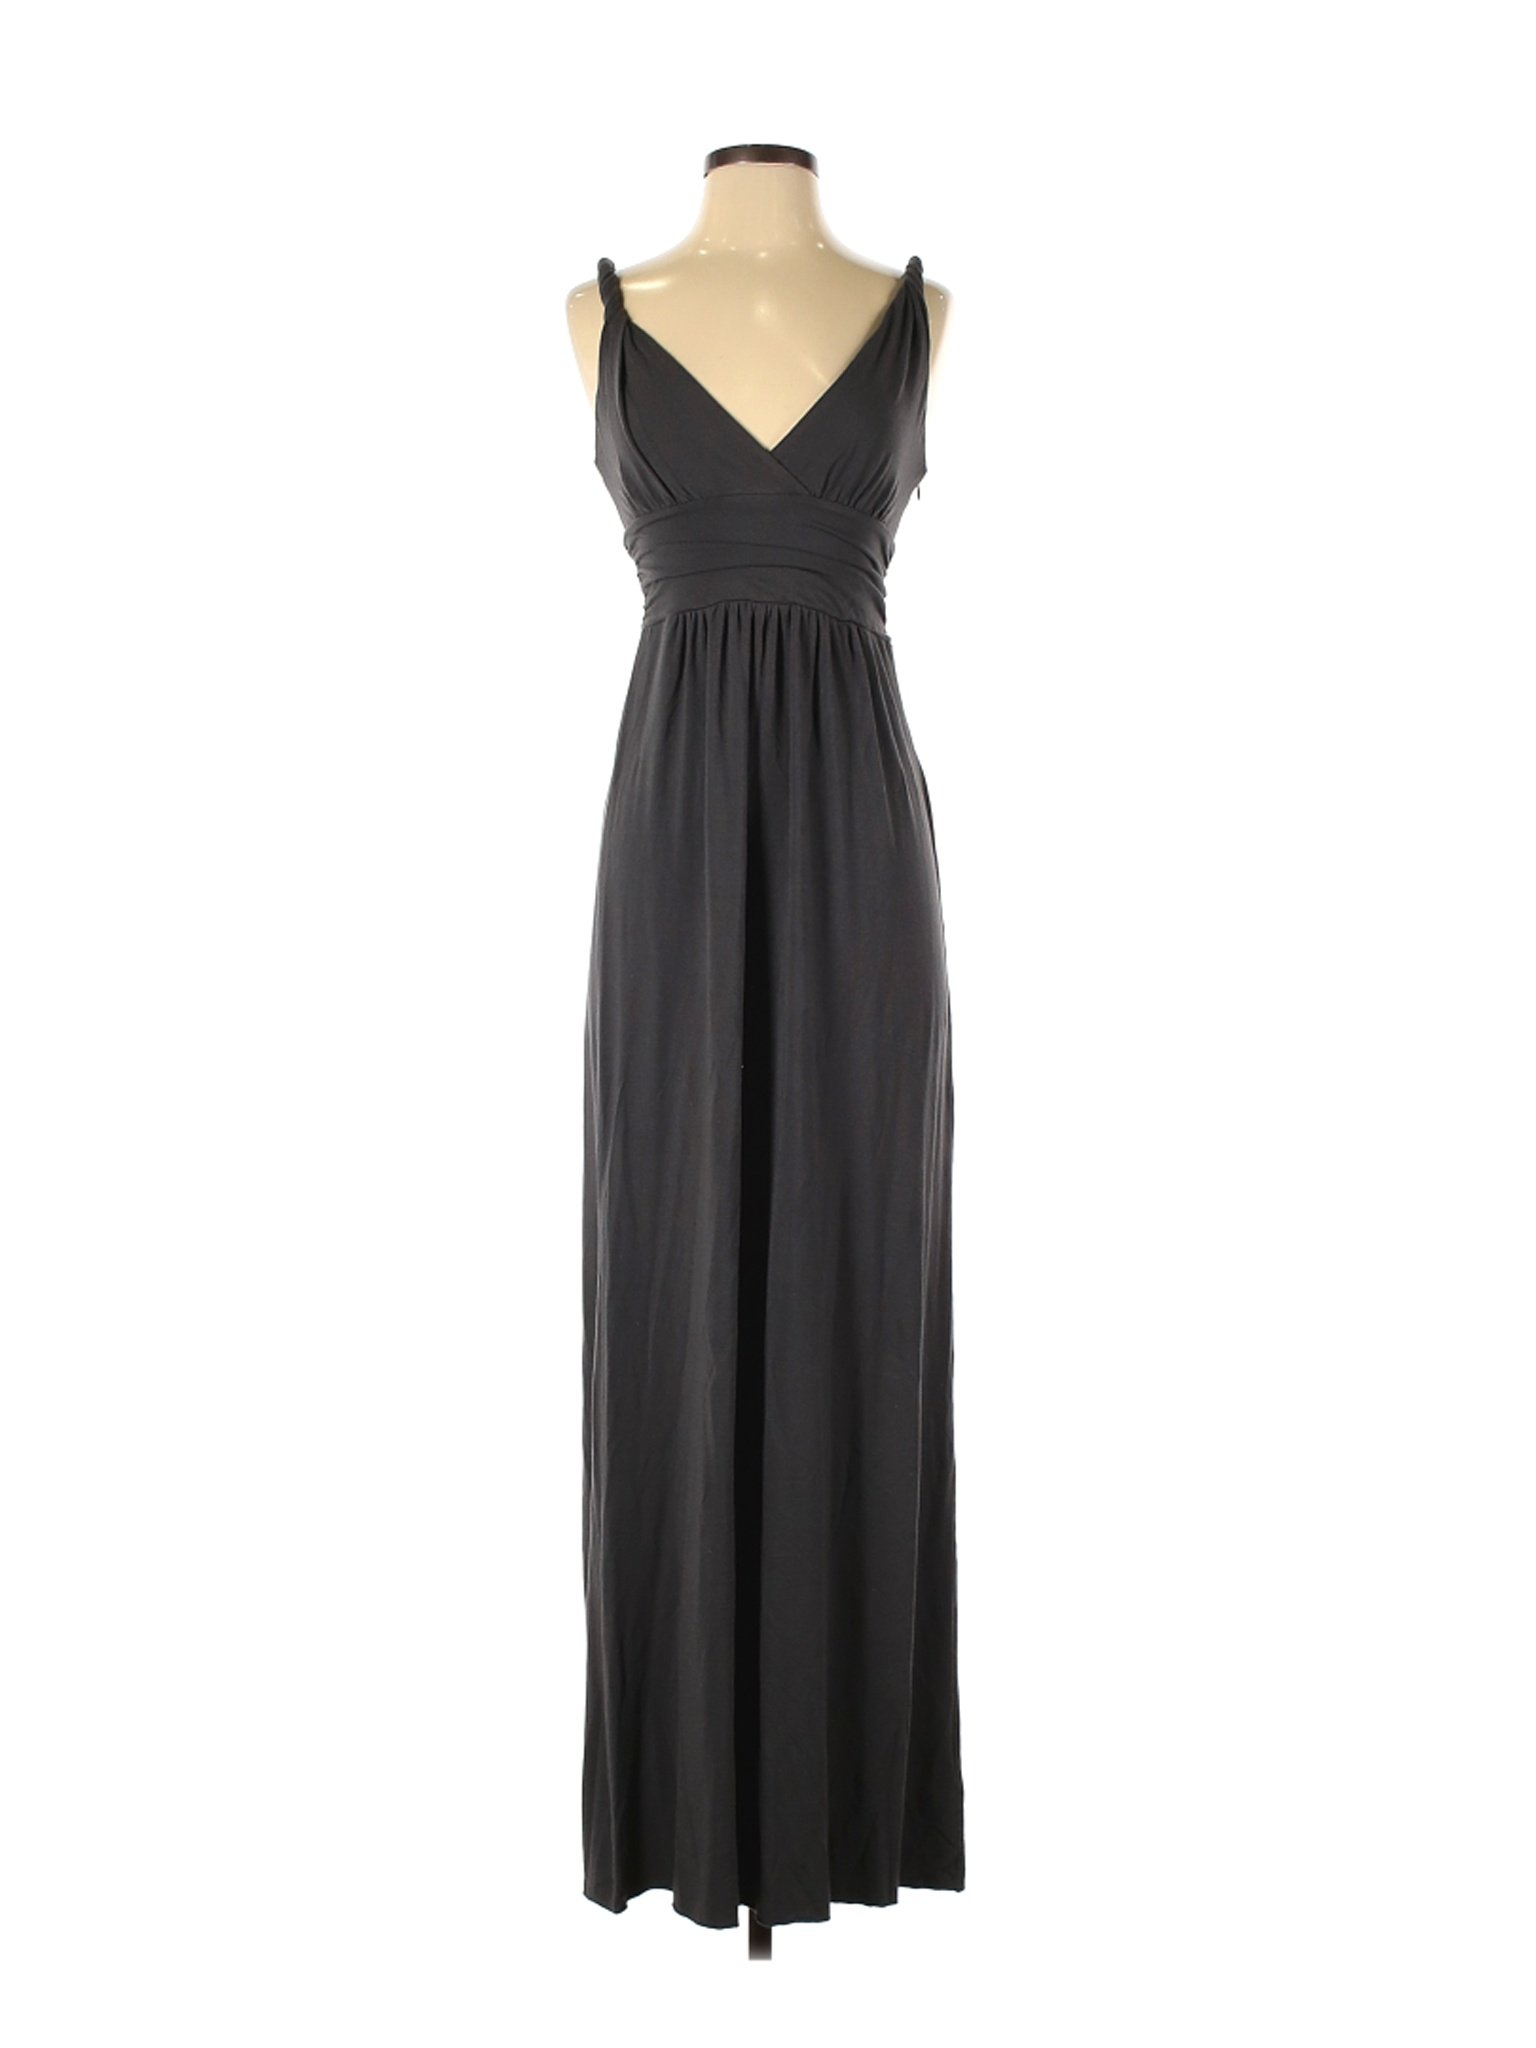 J.Crew Women Black Casual Dress 4 | eBay